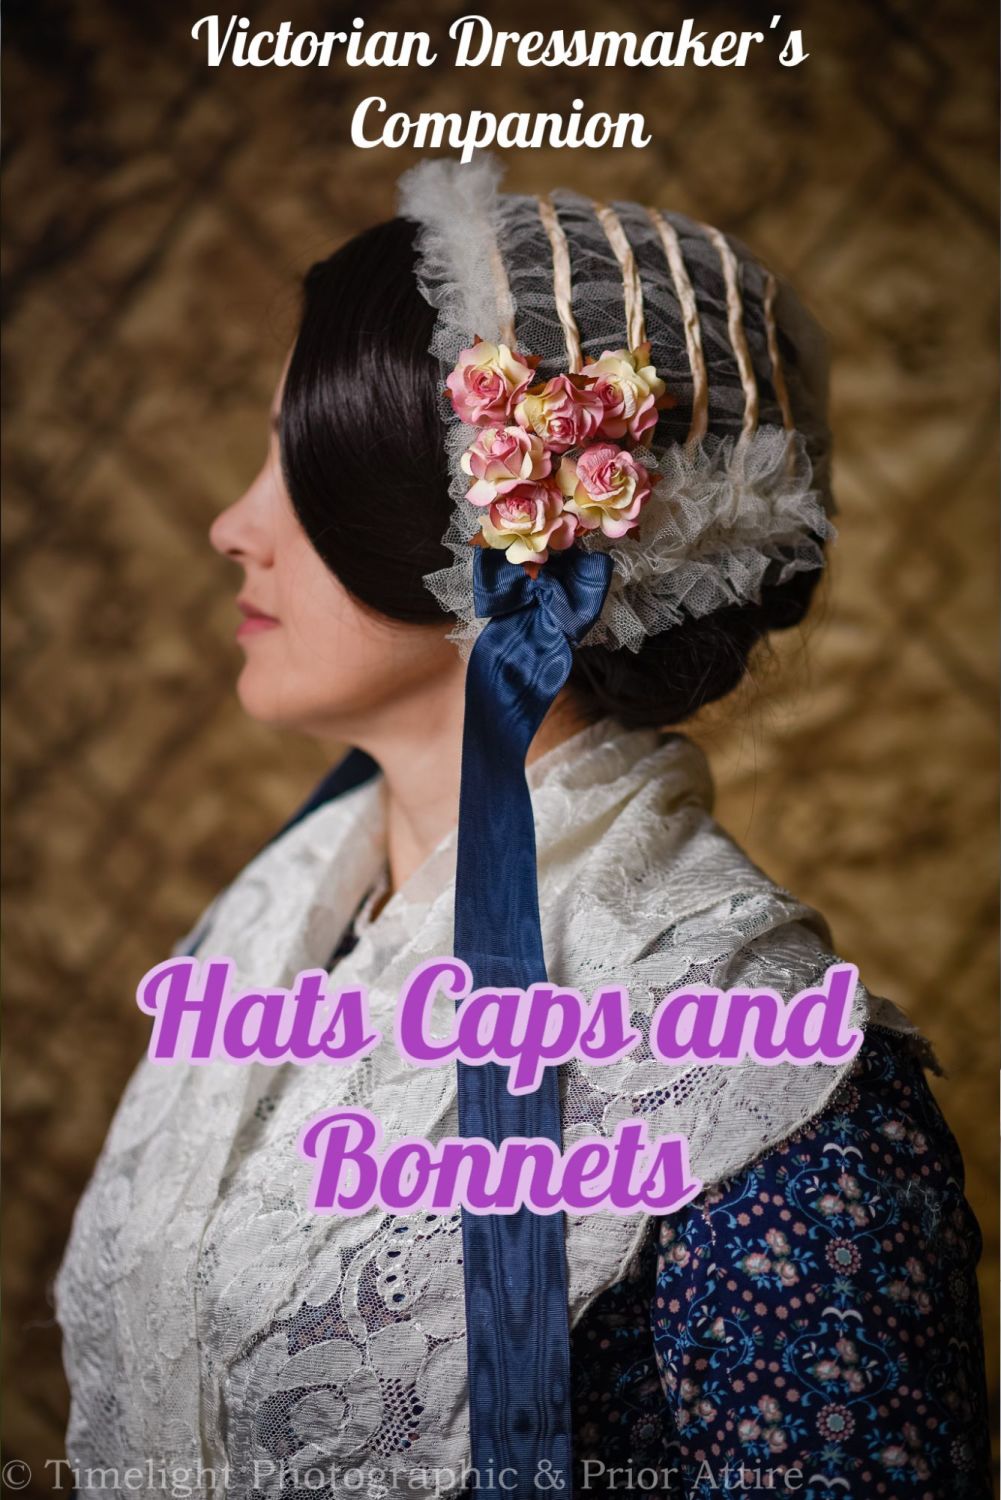 Imperfect: The Victorian Dressmaker Companion: hat caps and bonnets